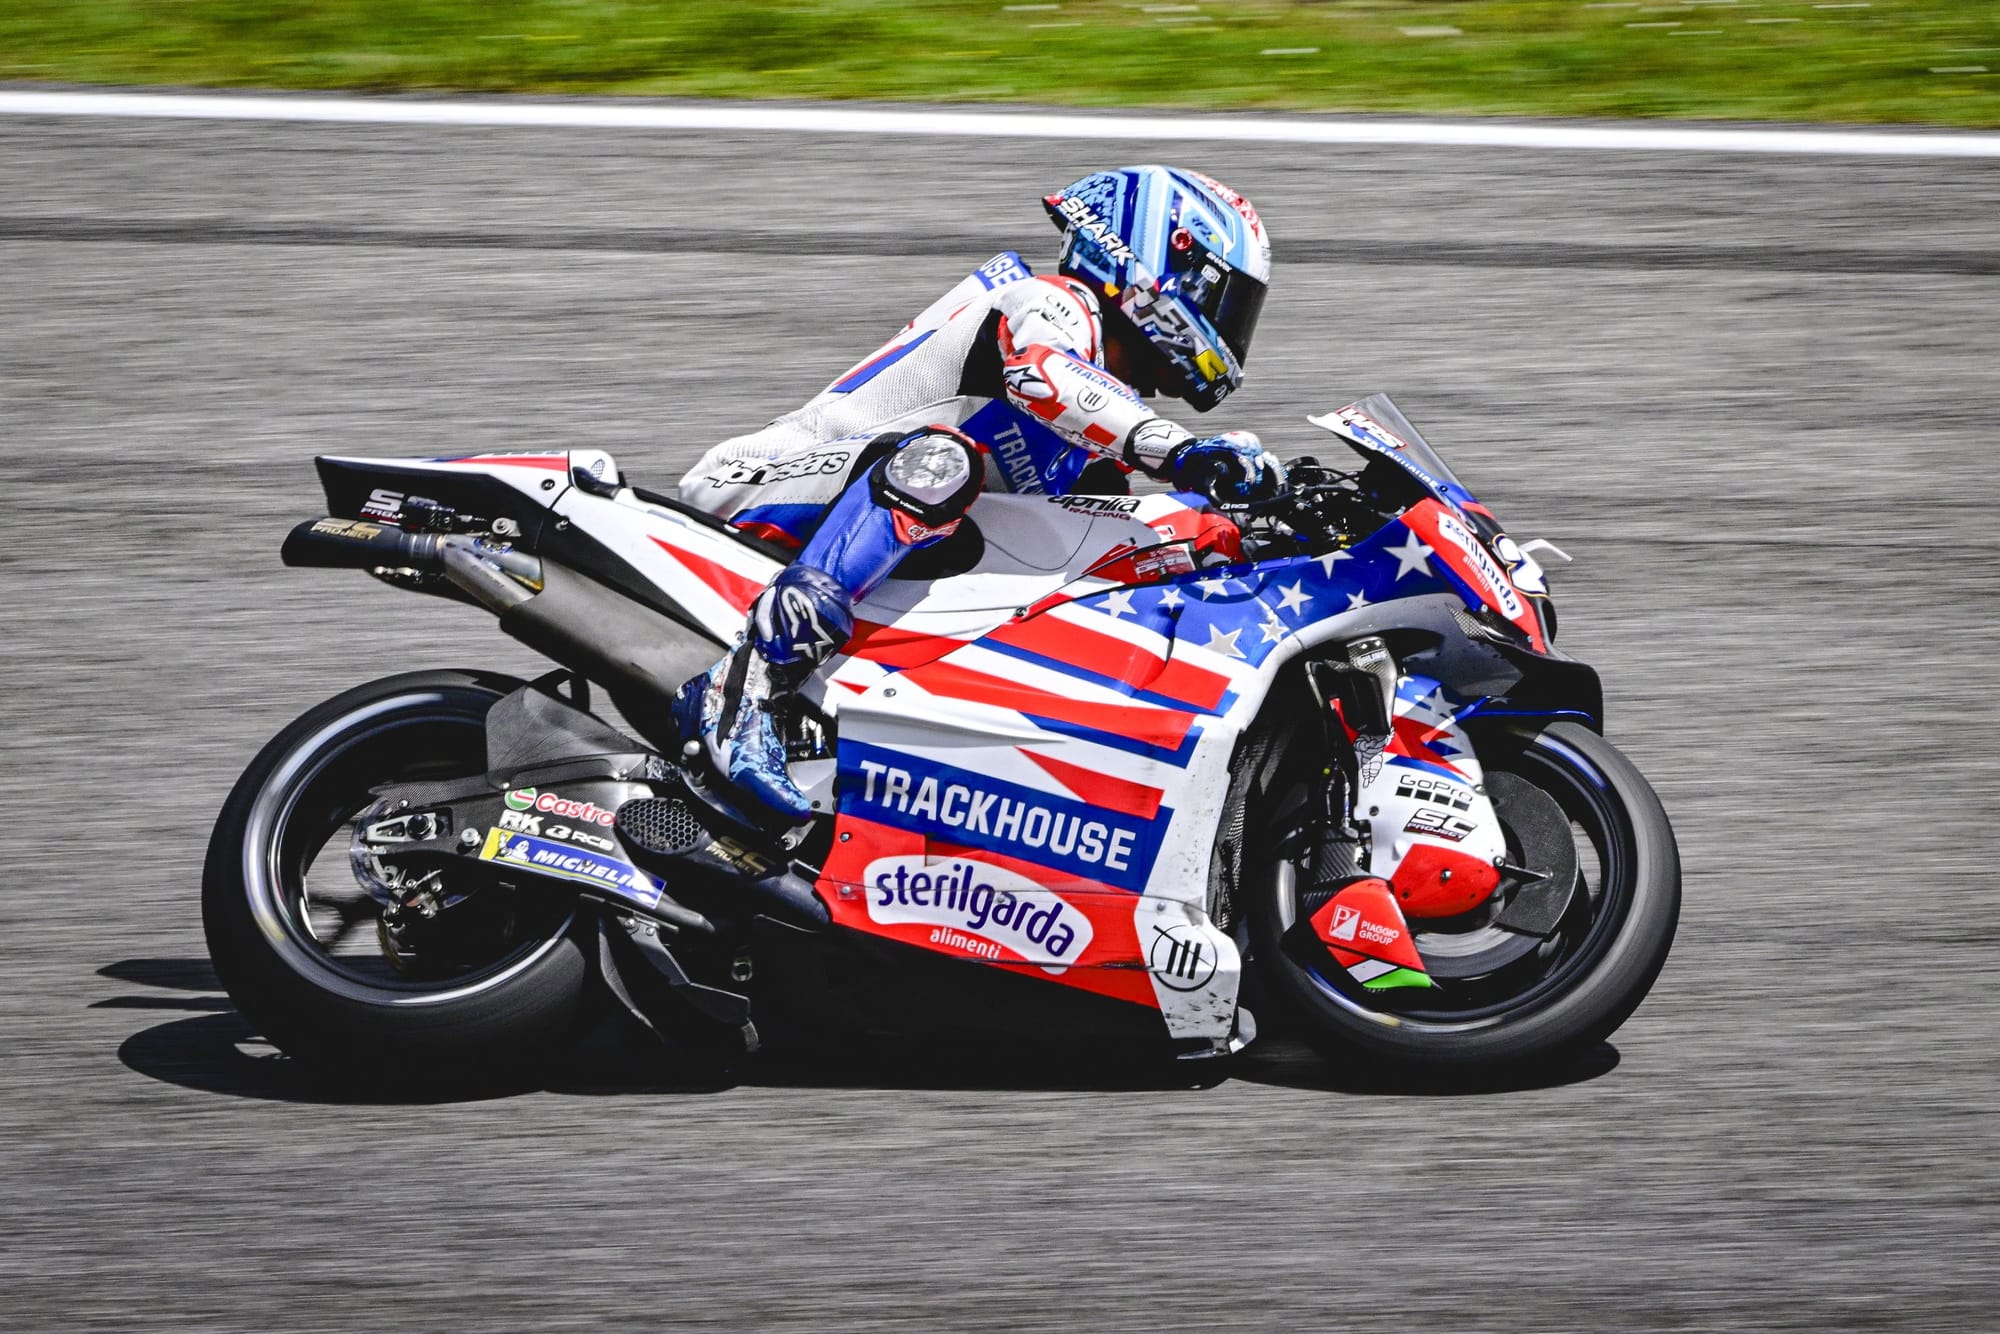 Raul Fernandez, Trackhouse Aprilia, MotoGP